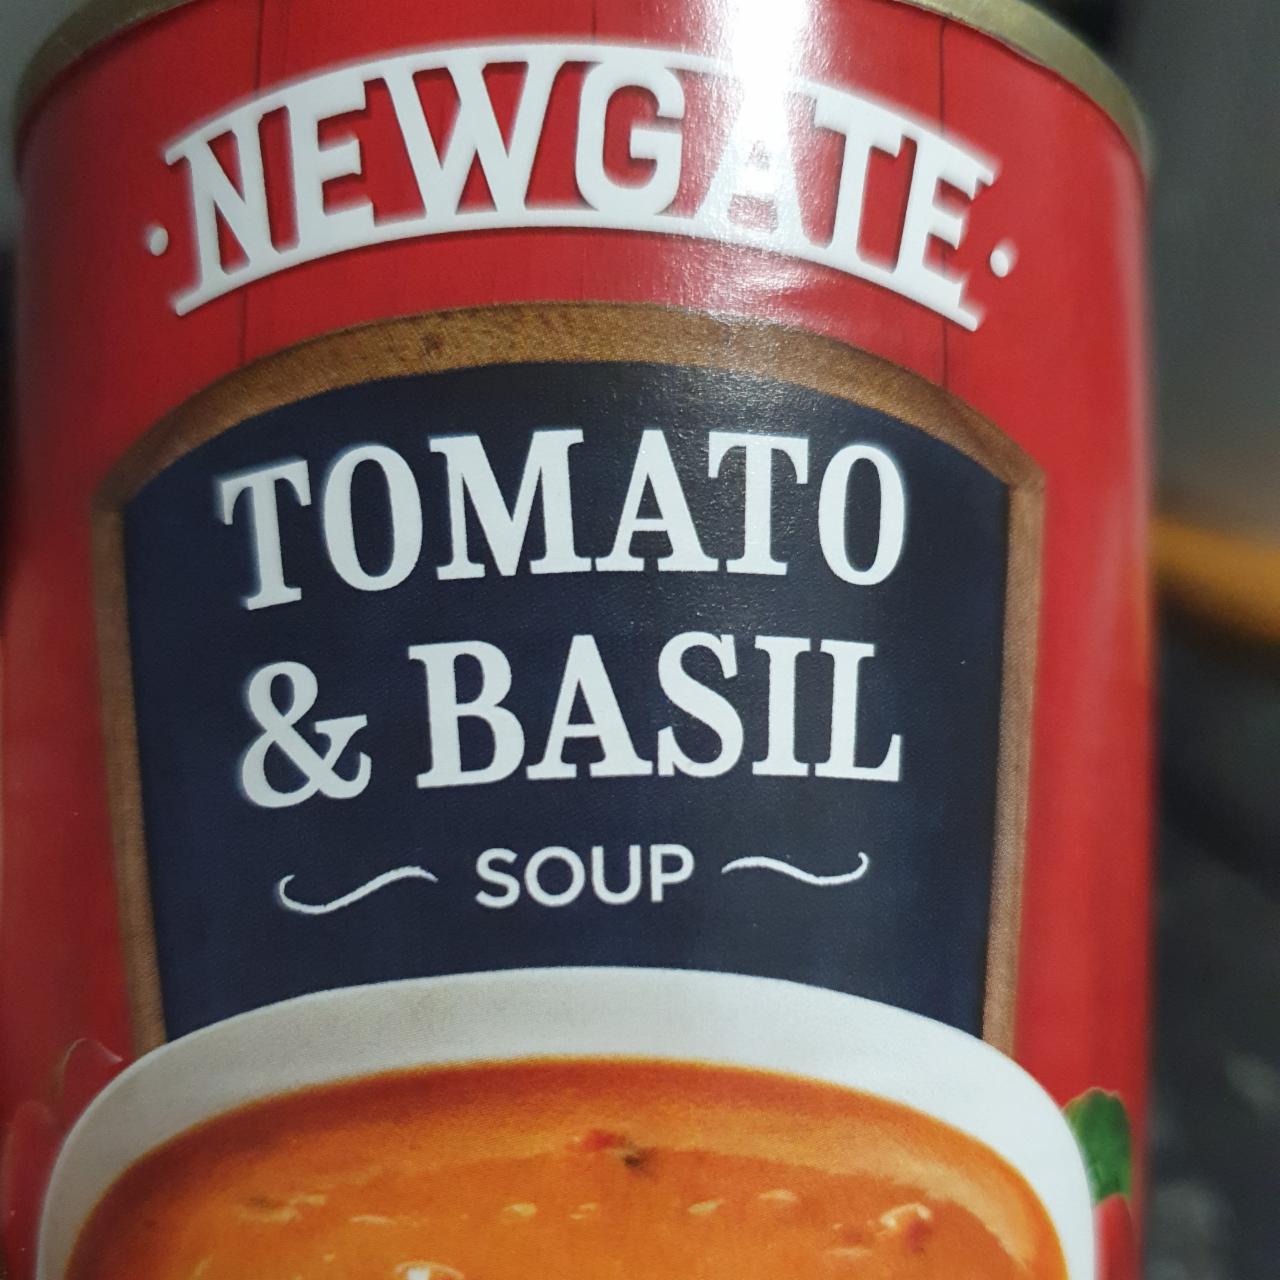 Fotografie - Tomato & basil soup Newgate